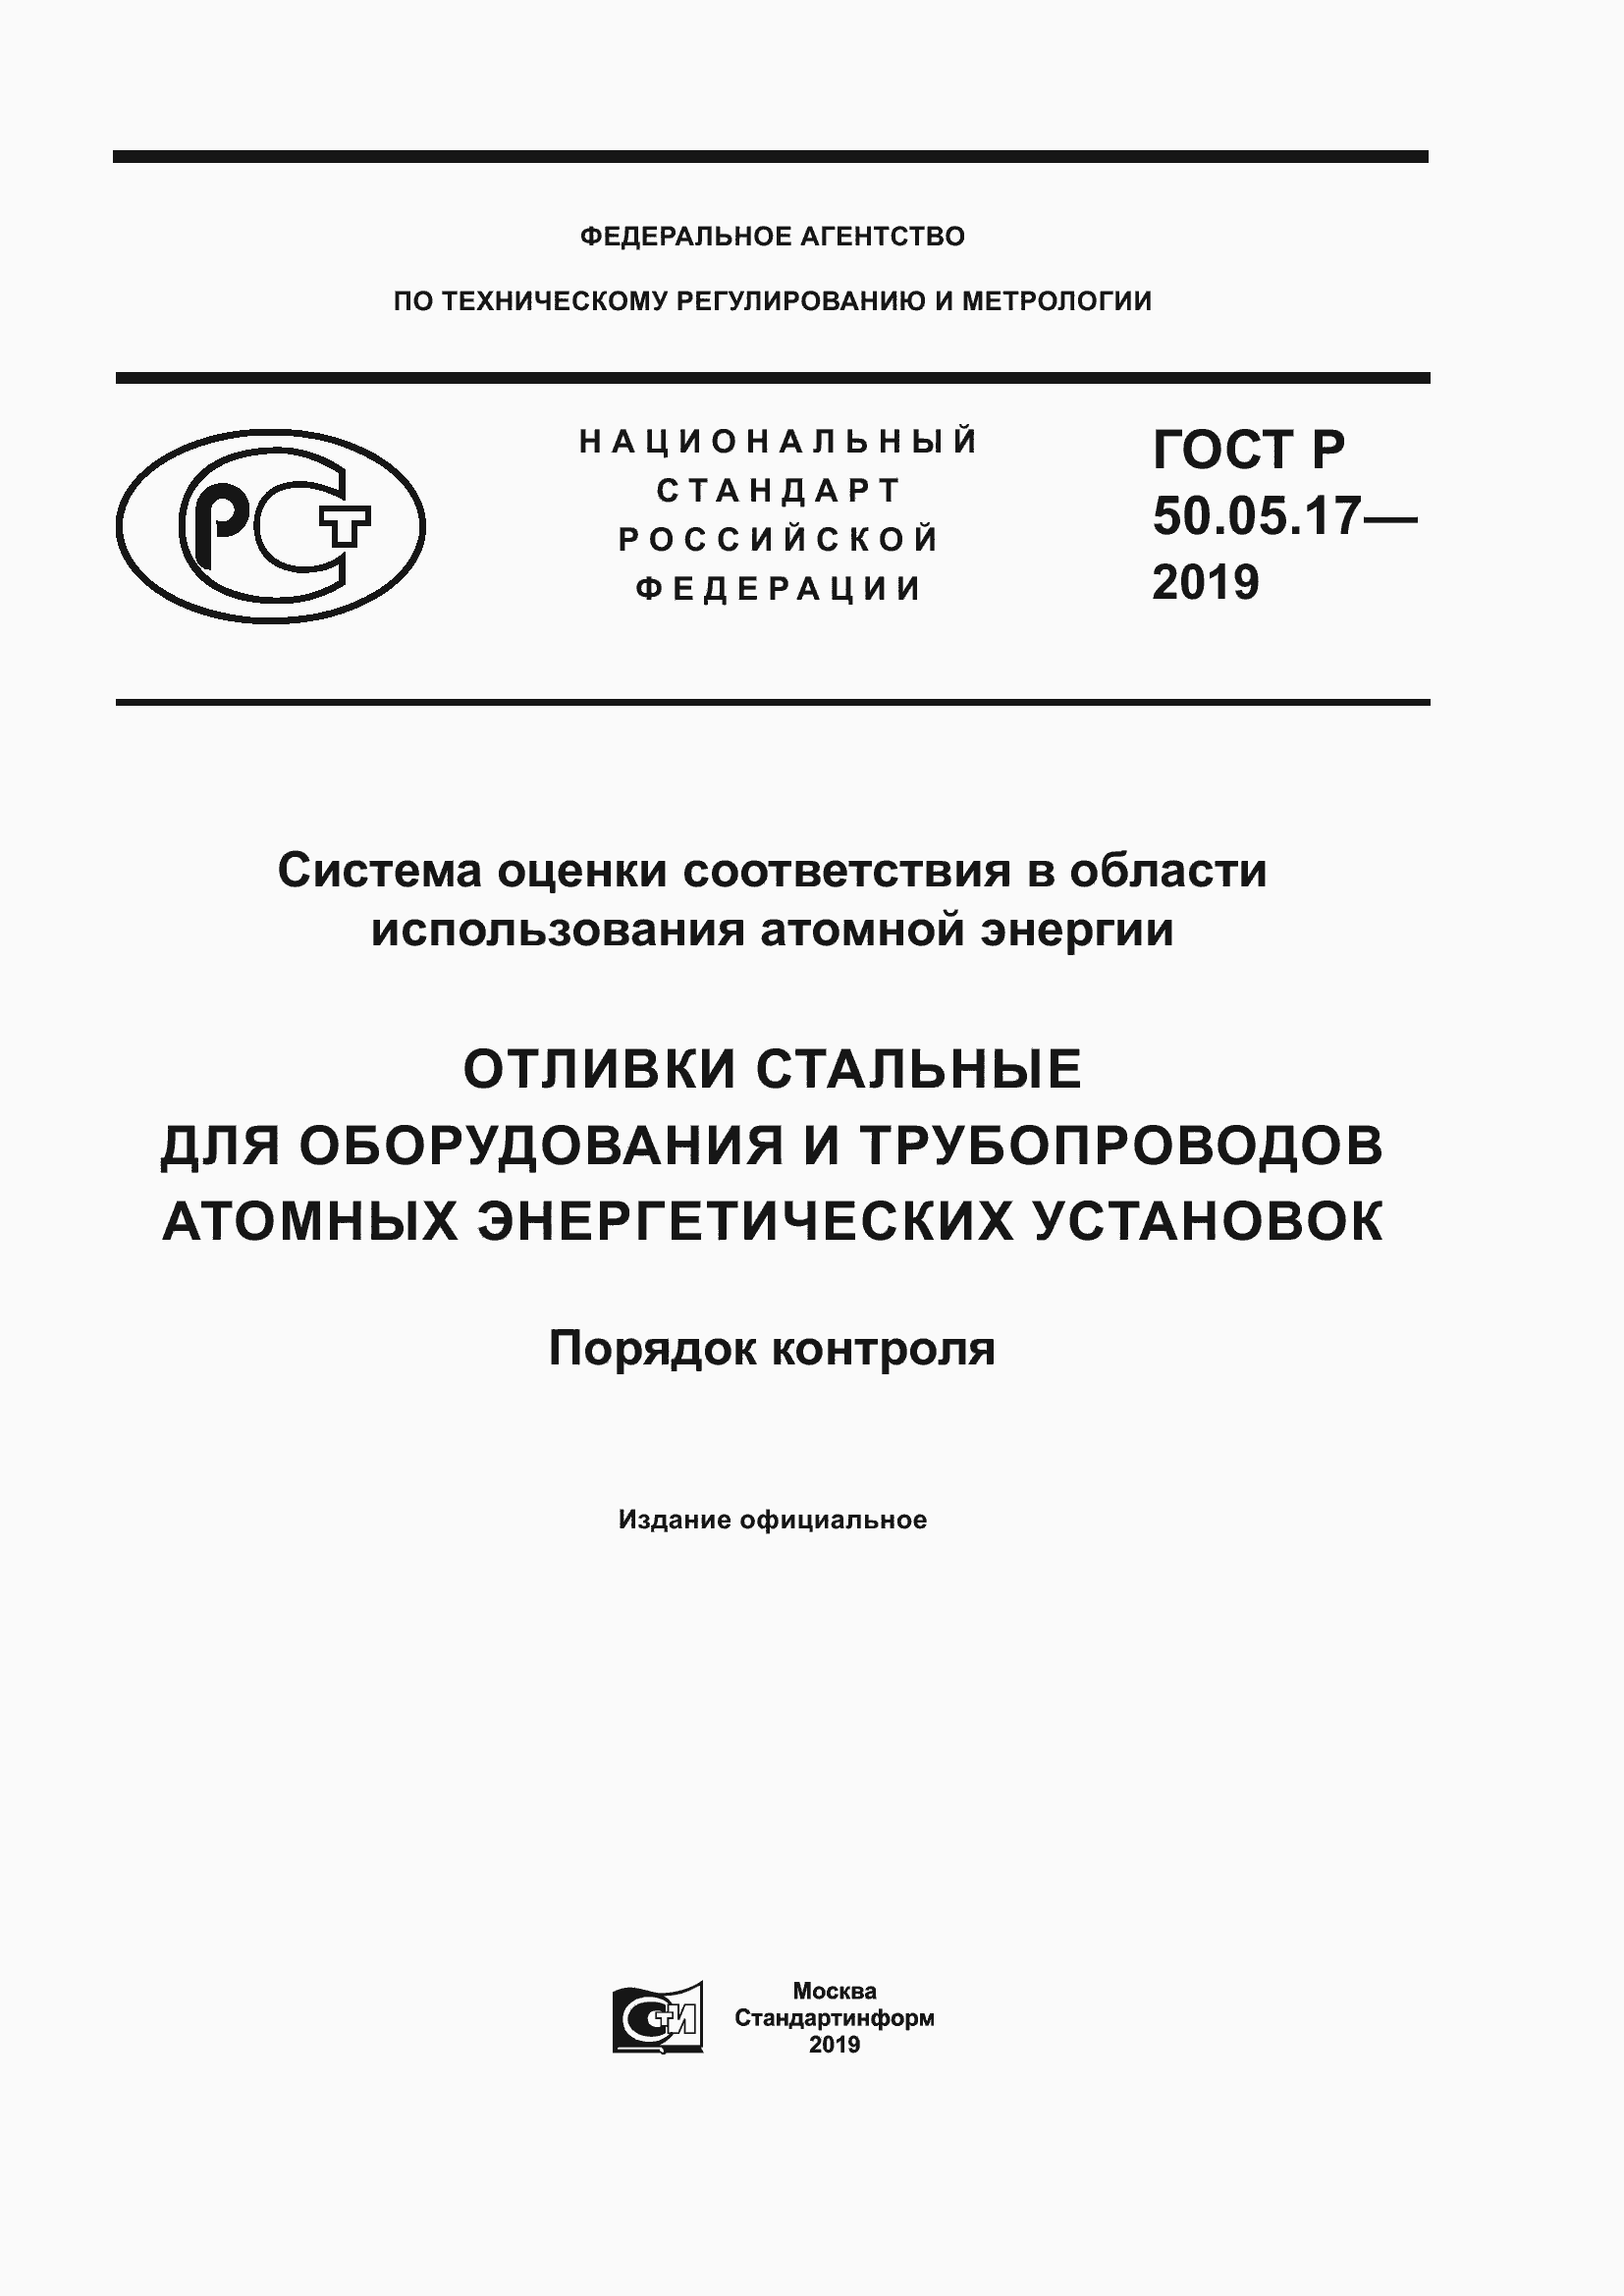 ГОСТ Р 50.05.17-2019. Страница 1